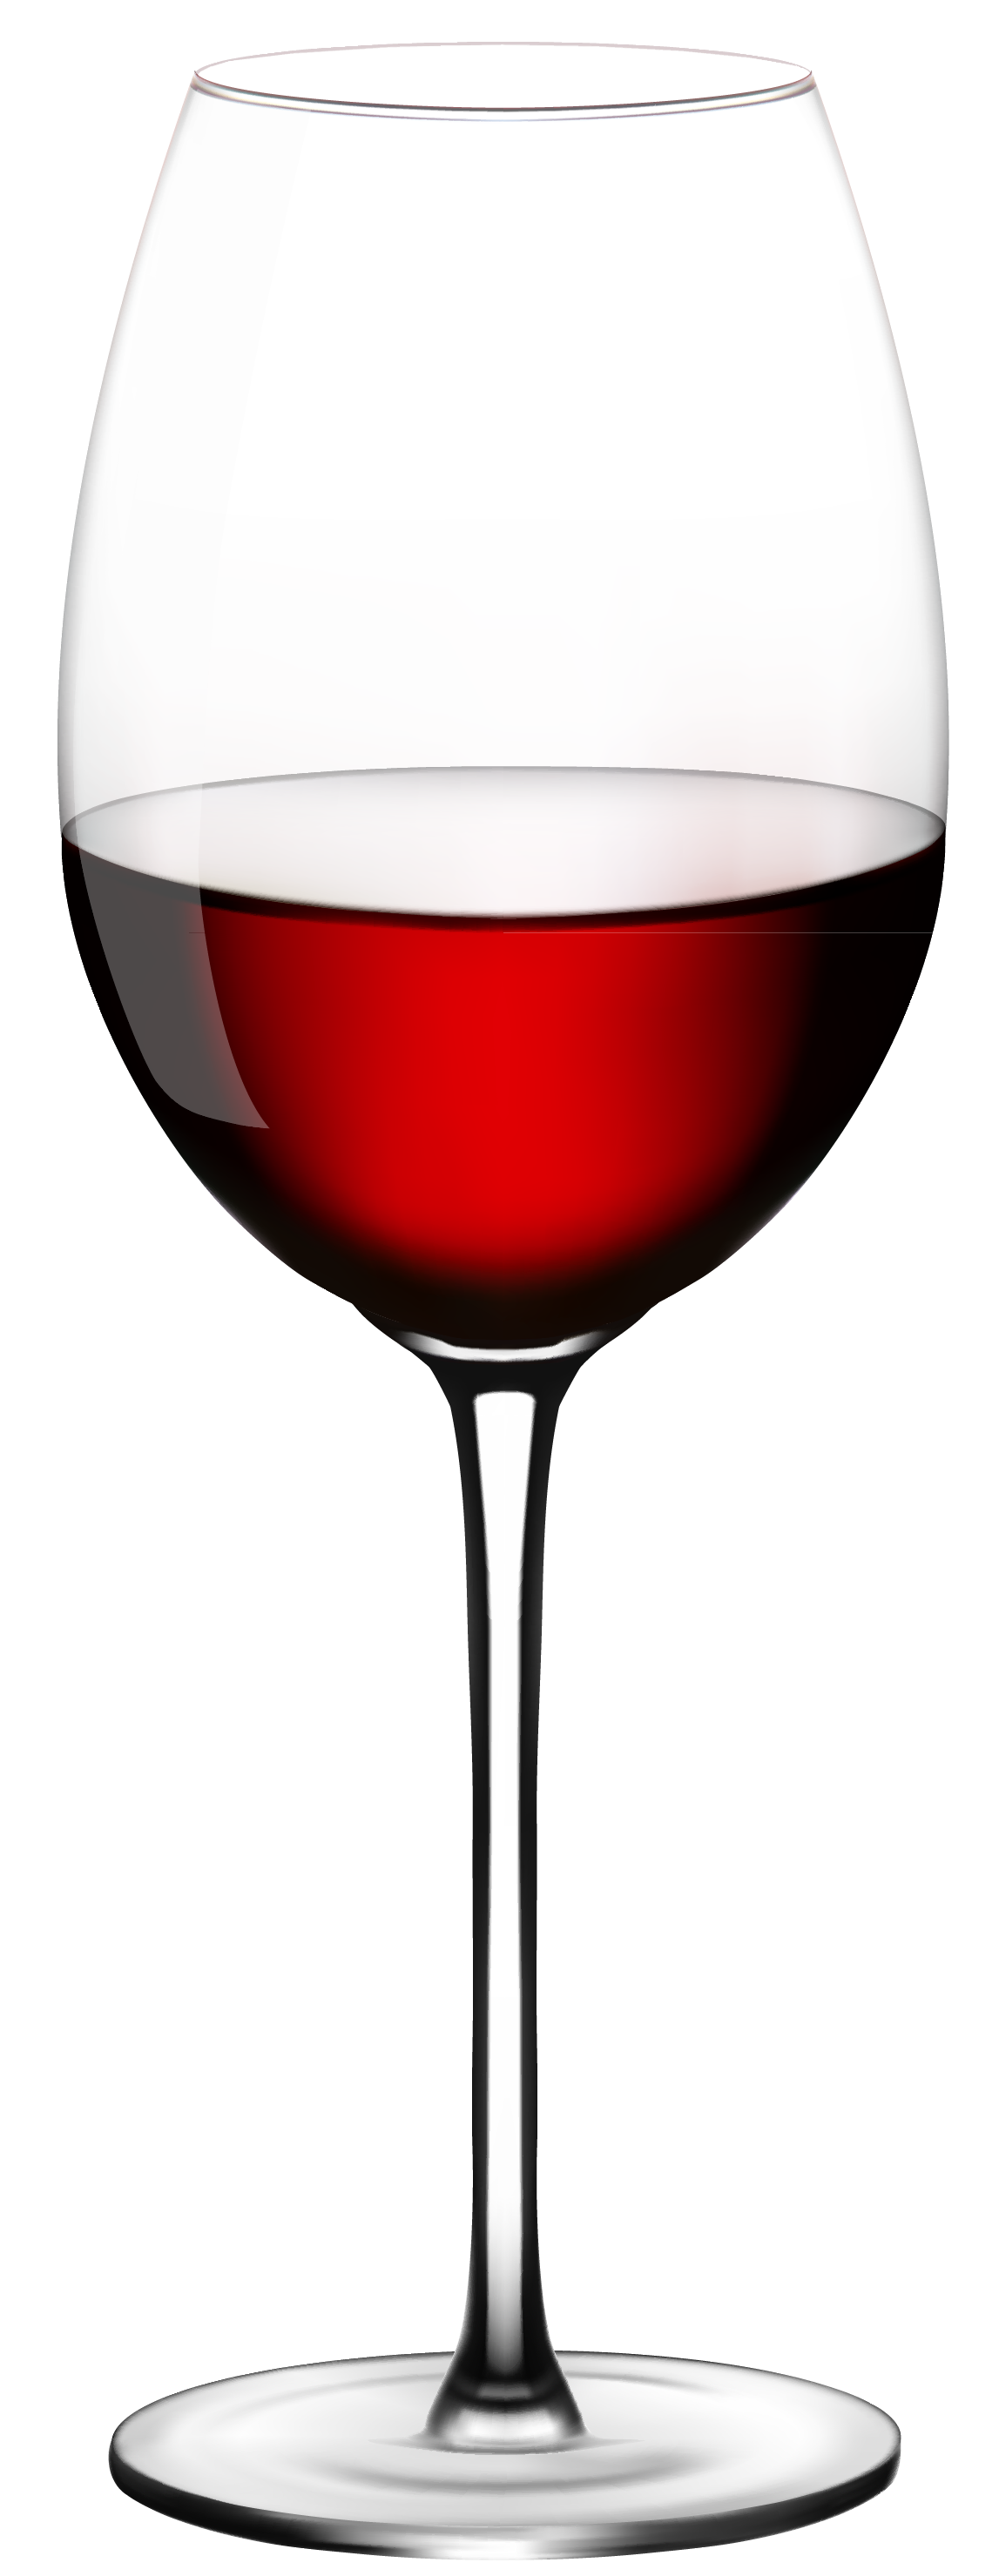 clipart wine glass free - photo #36